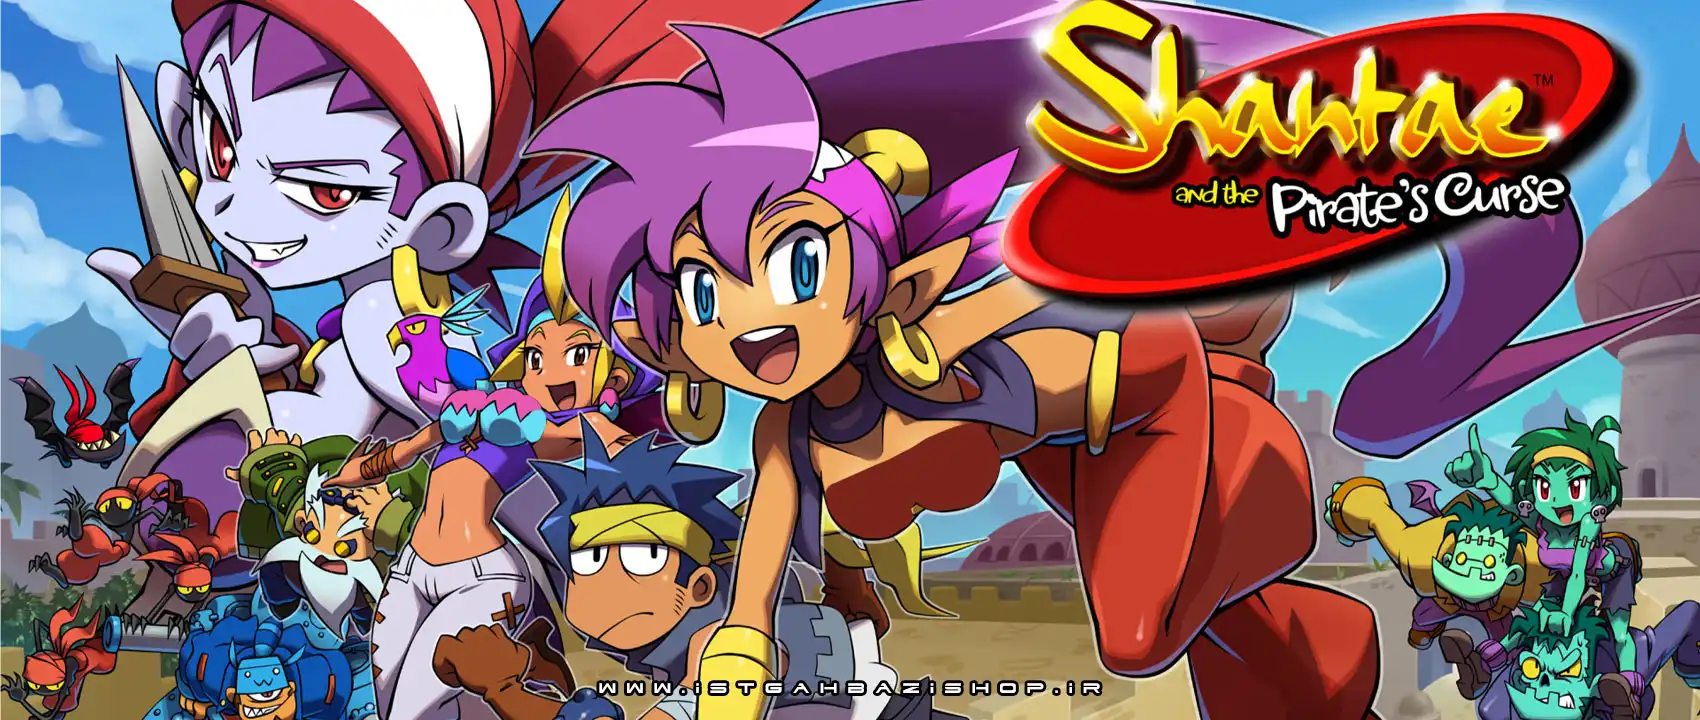 Shantae and the Pirates Curse Ps5